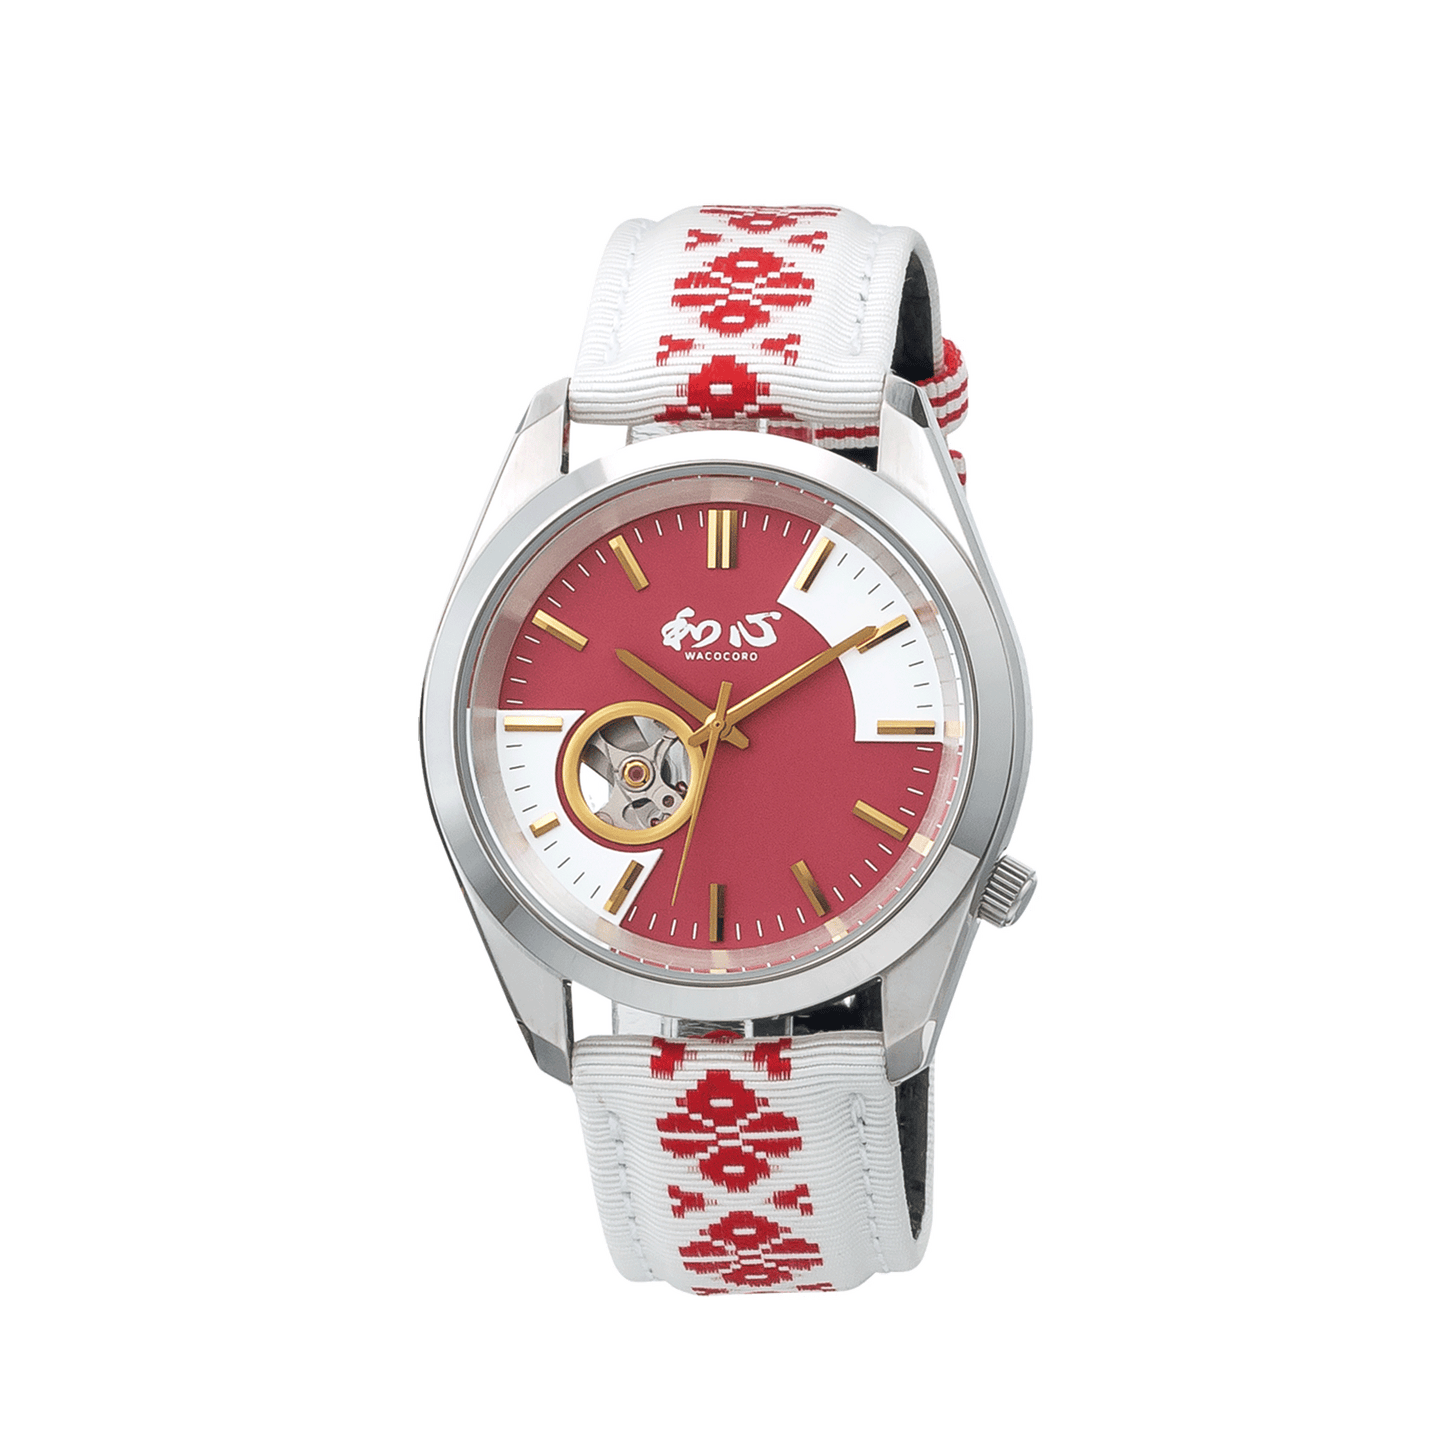 和心 メンズ腕時計 自動巻き式 WA004M-A  博多織 【日本製 新品】腕時計